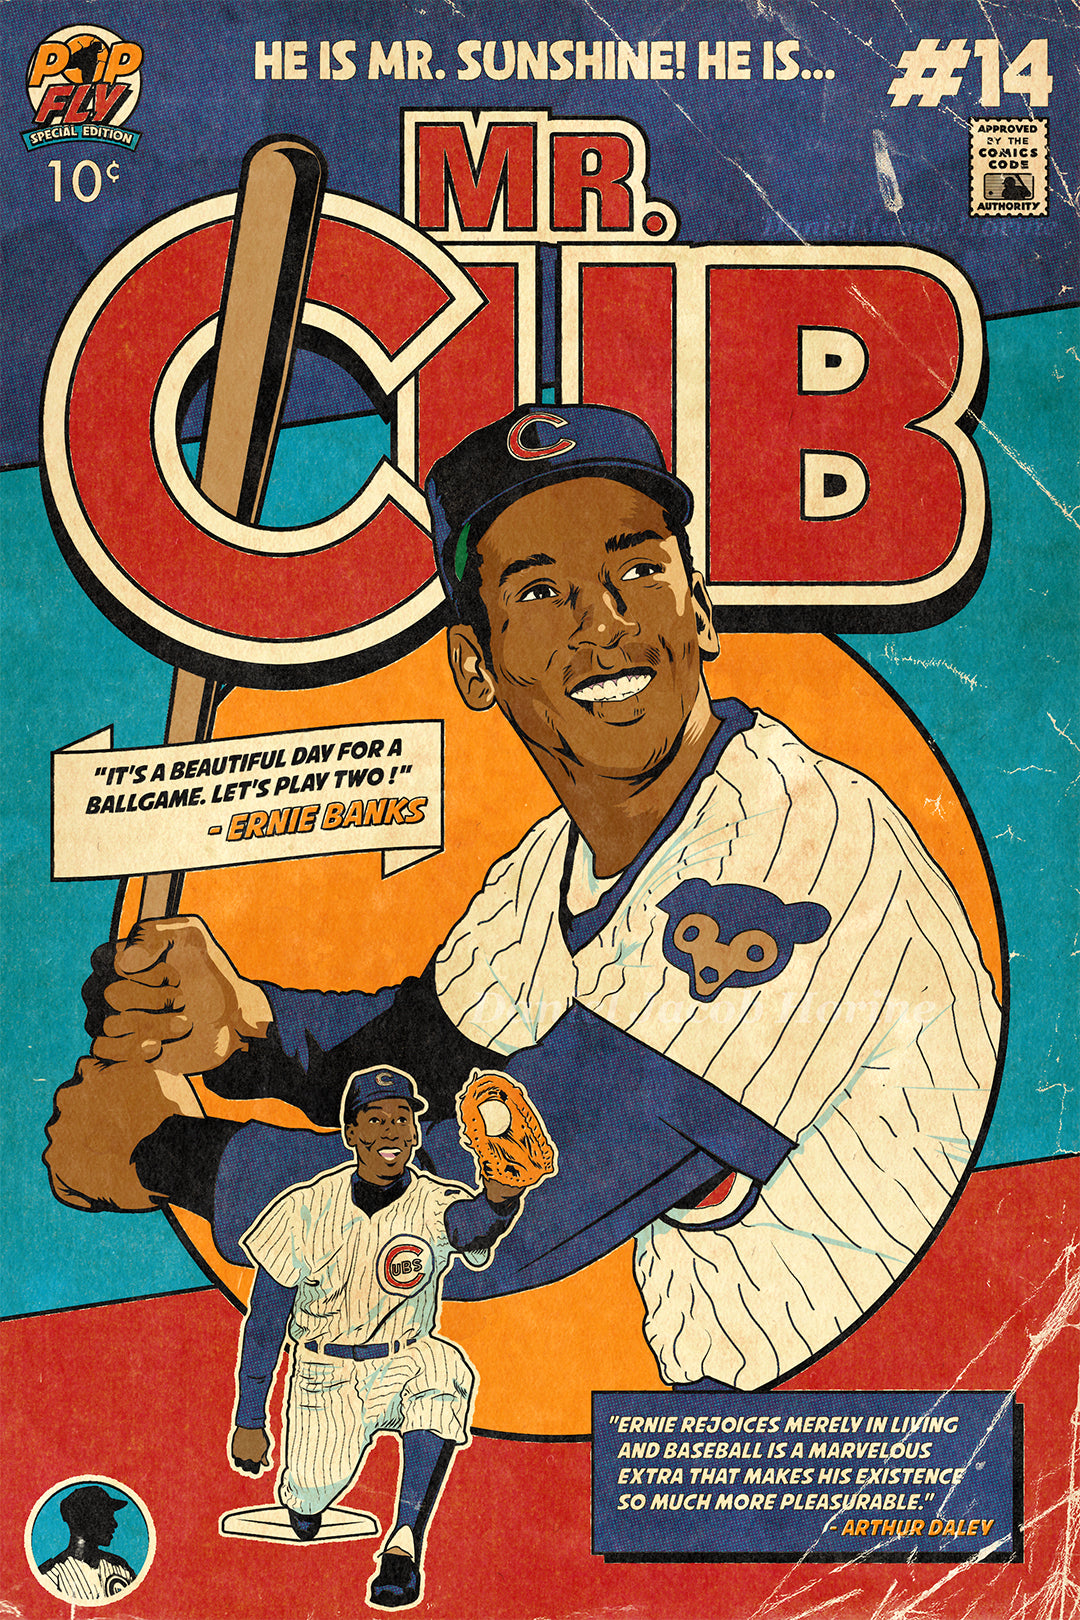 16. (SOLD OUT) "Mr. Cub" Ernie Banks 7" x 10.5" Art Print